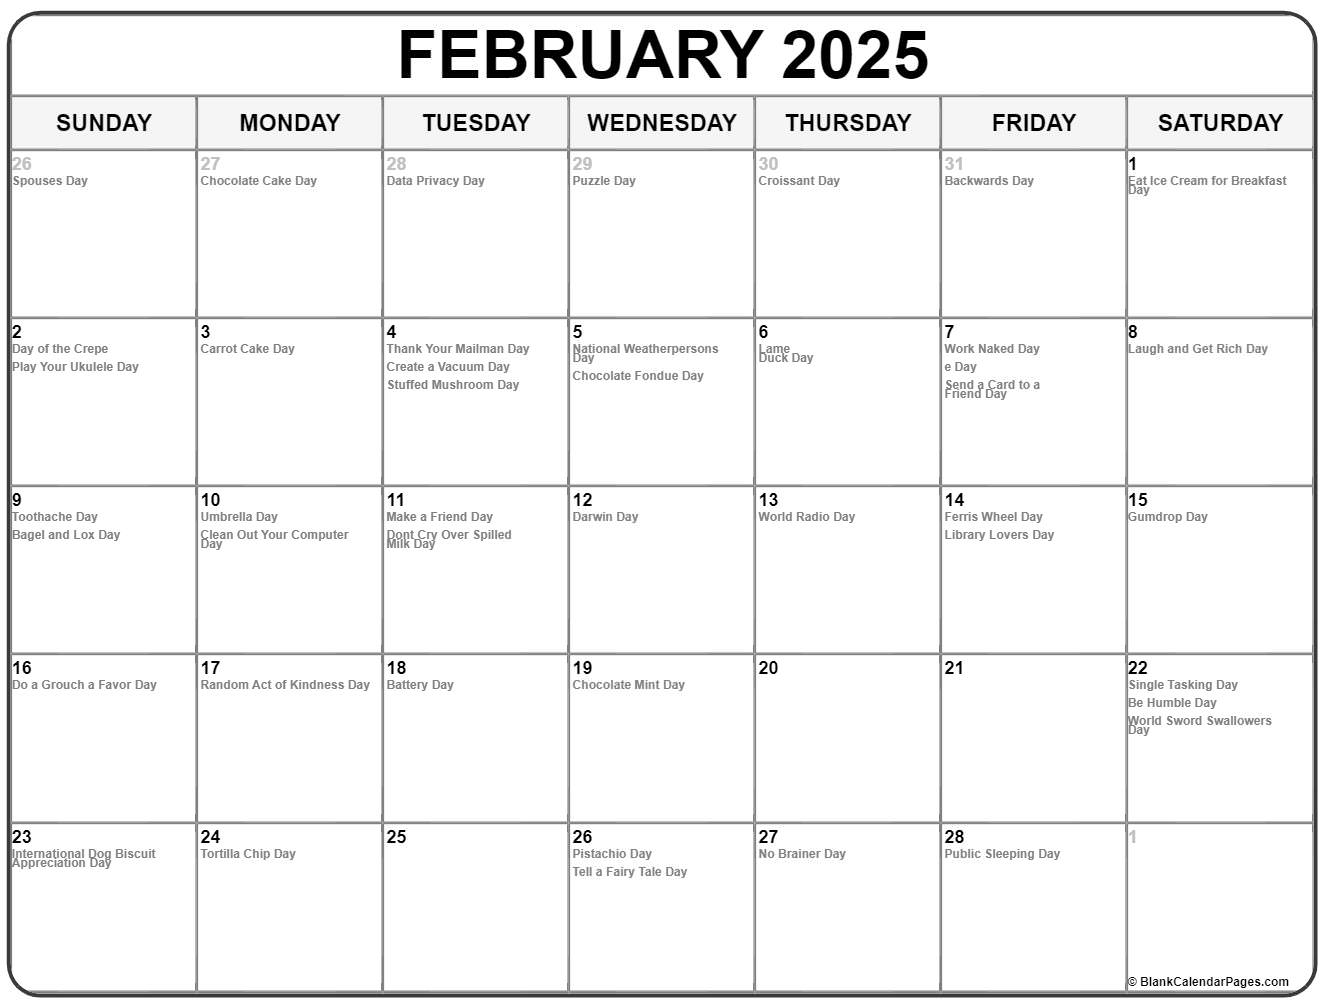 february-2025-calendar-template-bank2home